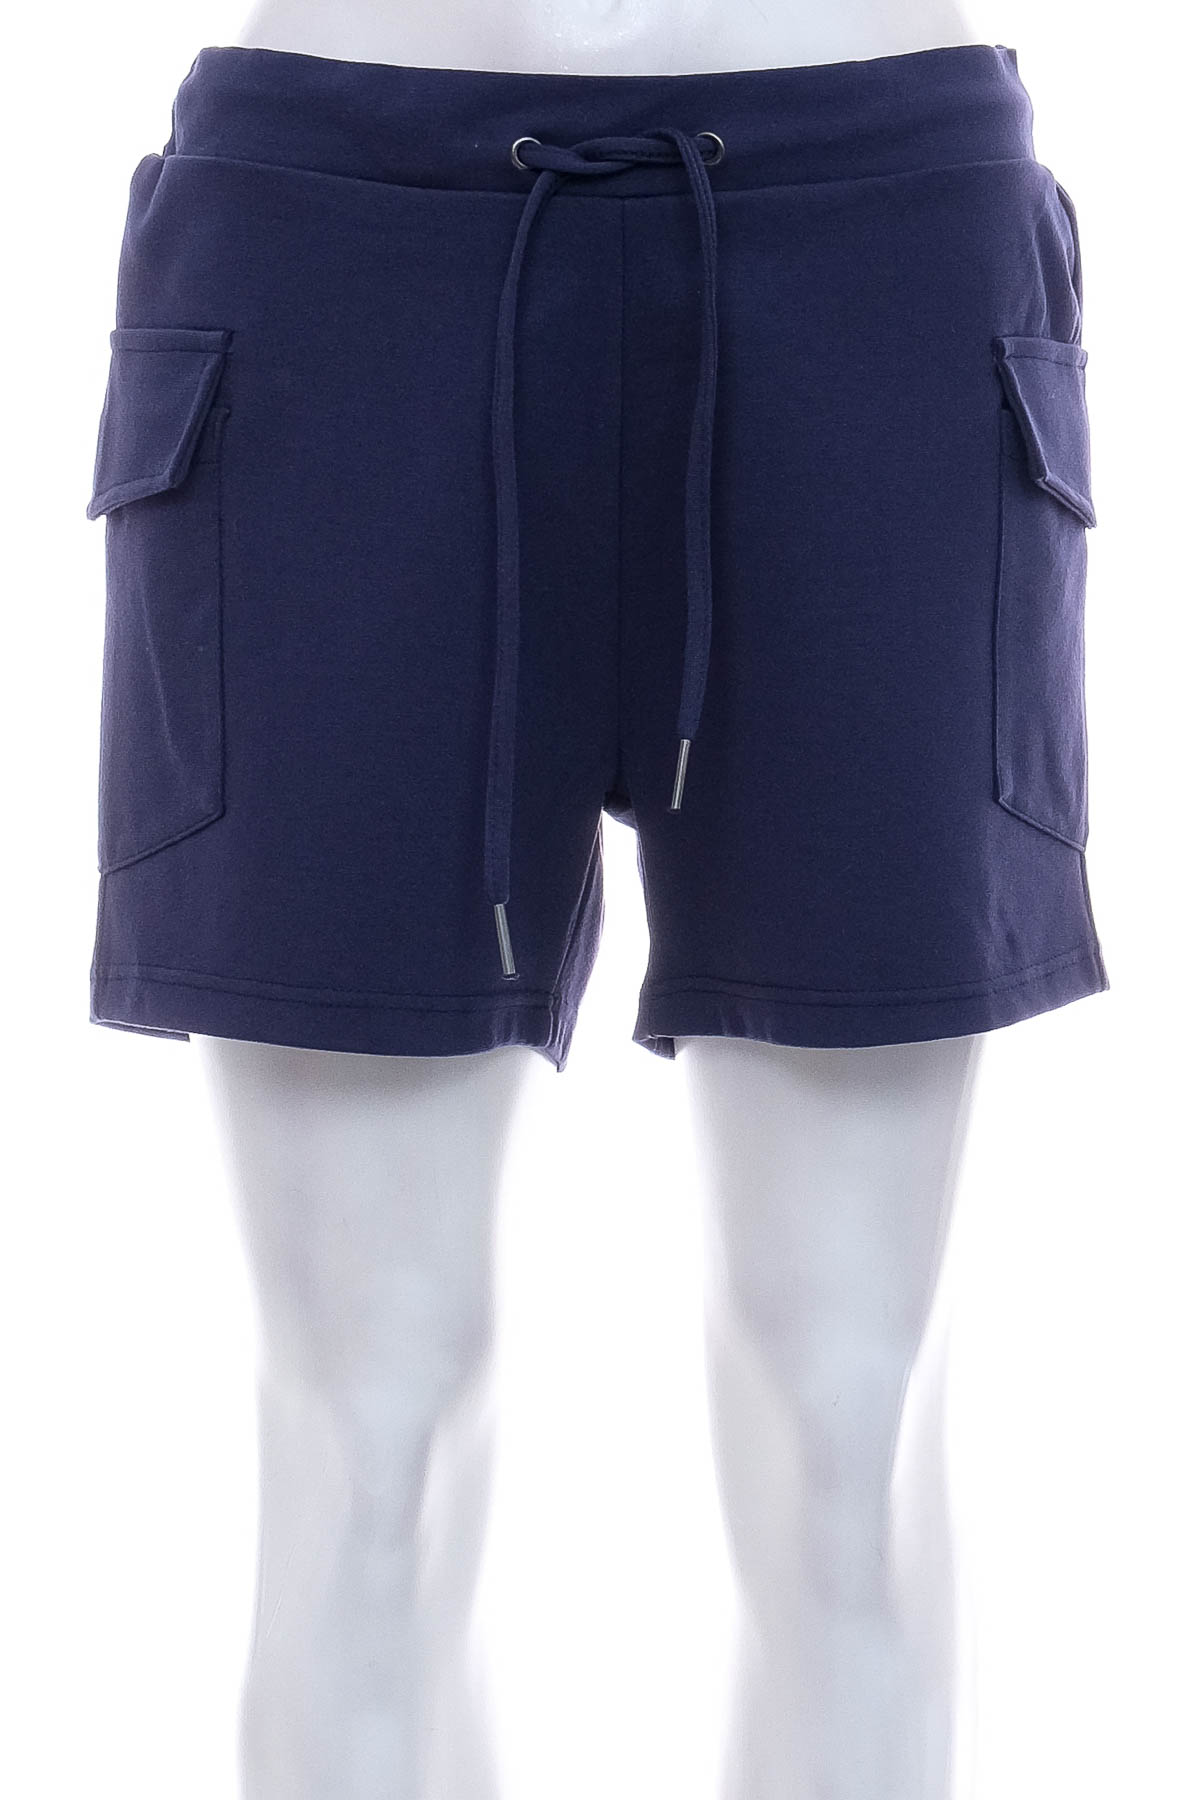 Female shorts - 9TH Avenue - 0